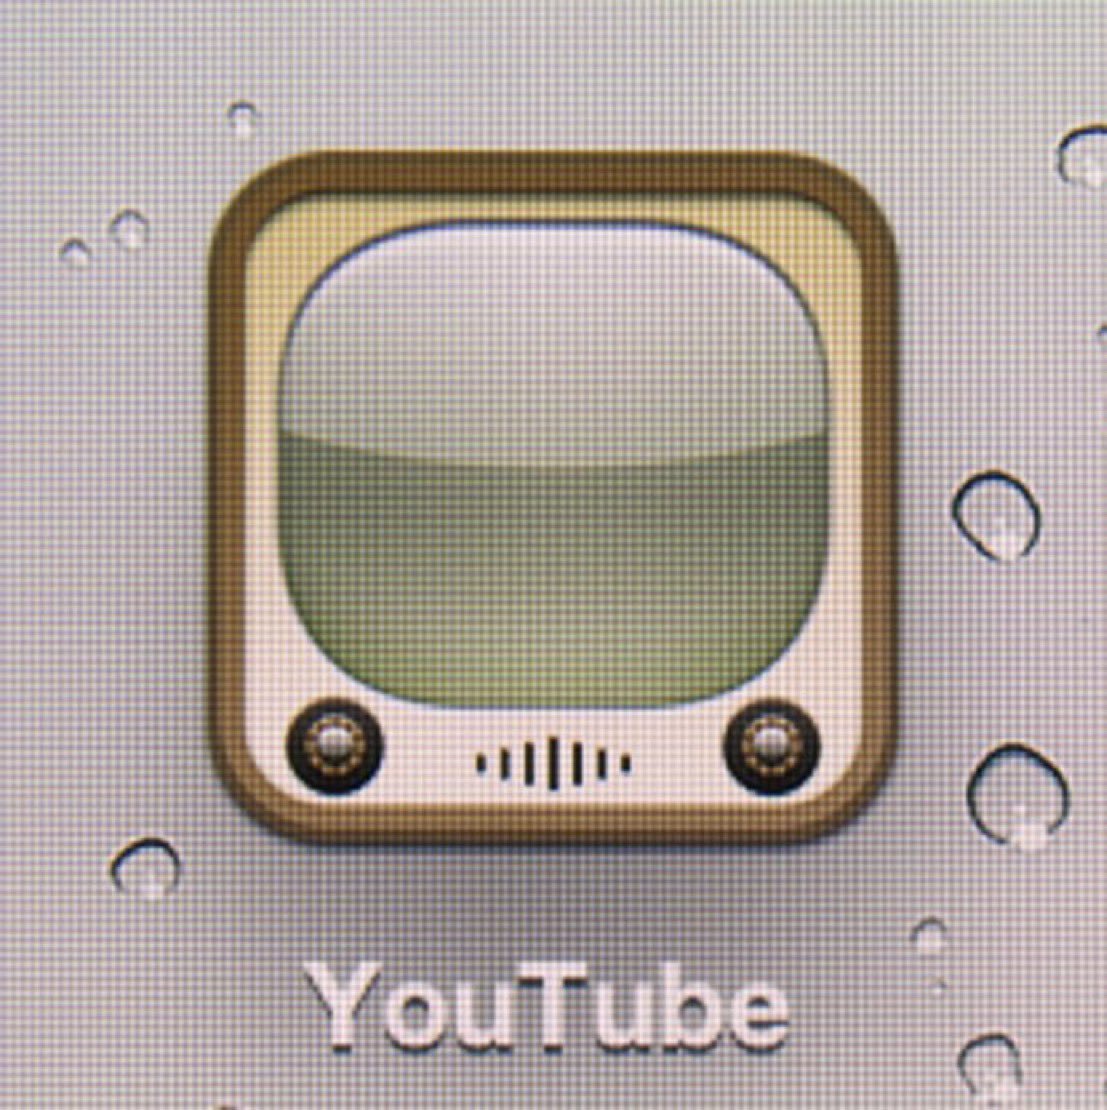 the original YouTube iPhone icon